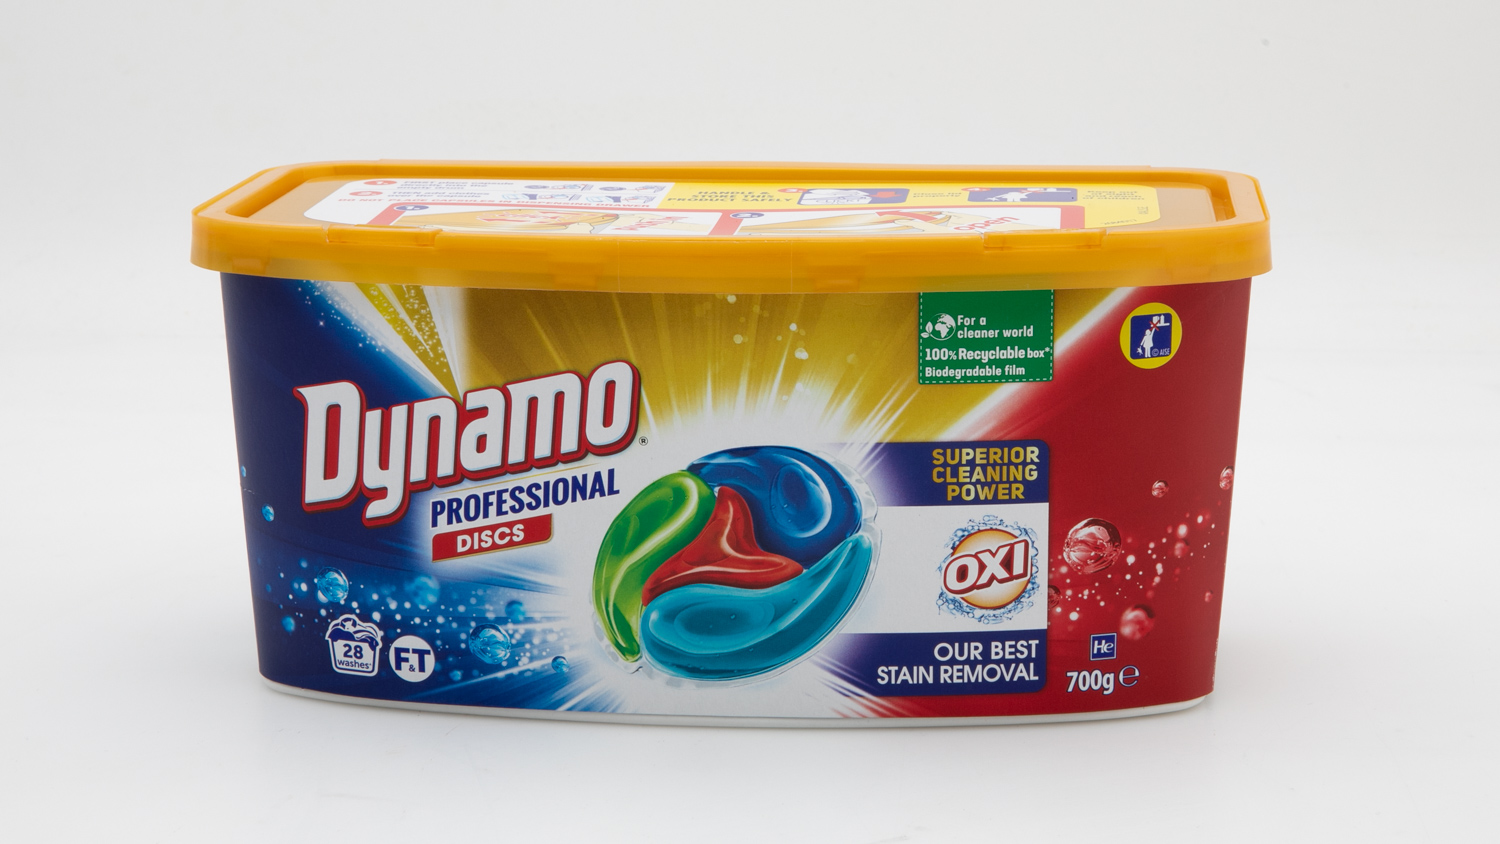 Dynamo Professional Discs Oxi 28 Capsules 700g Top Loader carousel image